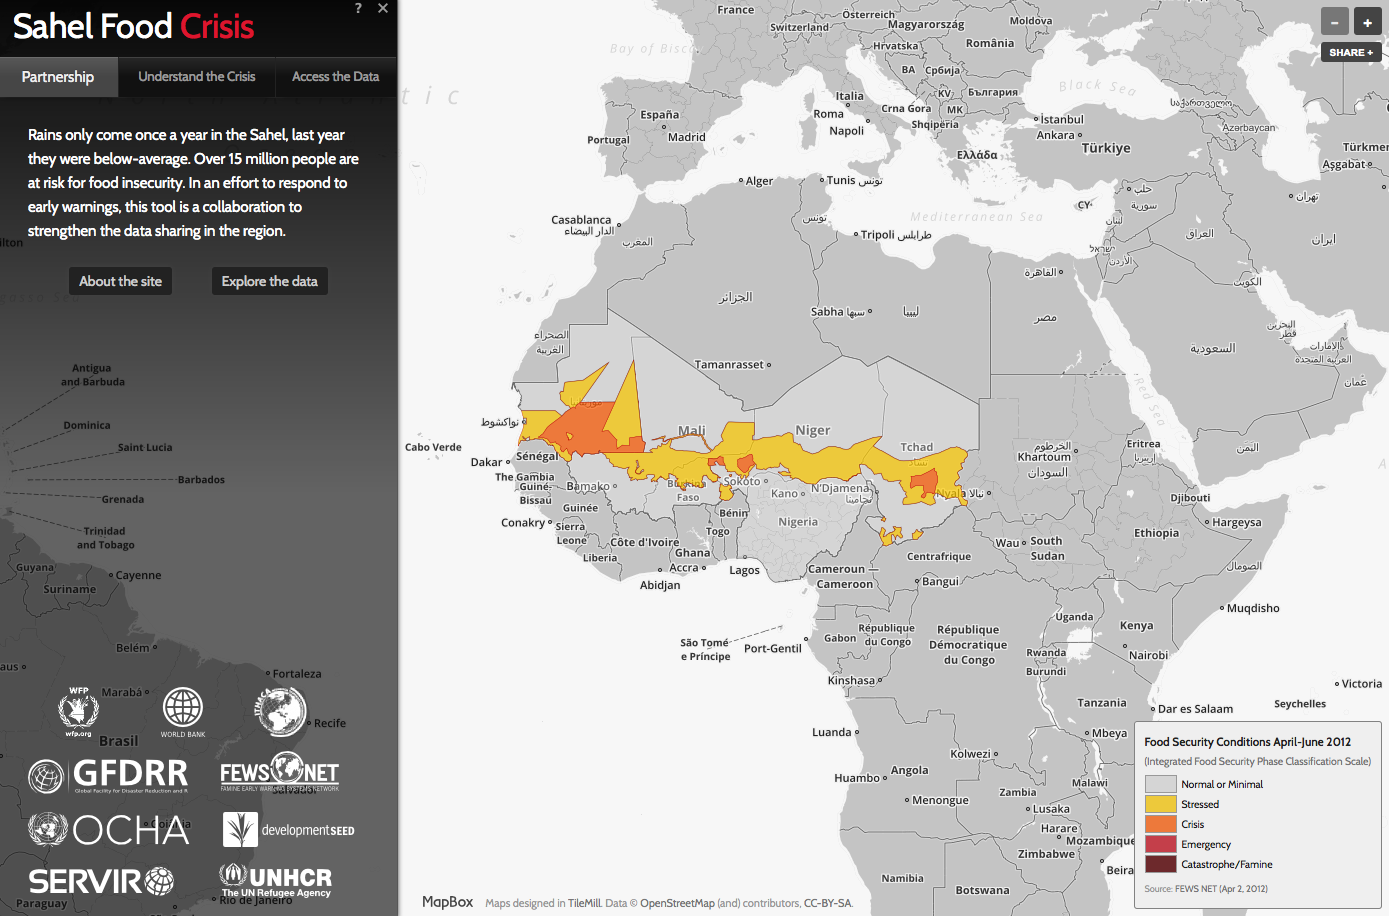 esempio di mappa per finalità umanitarie http://sahelresponse.org